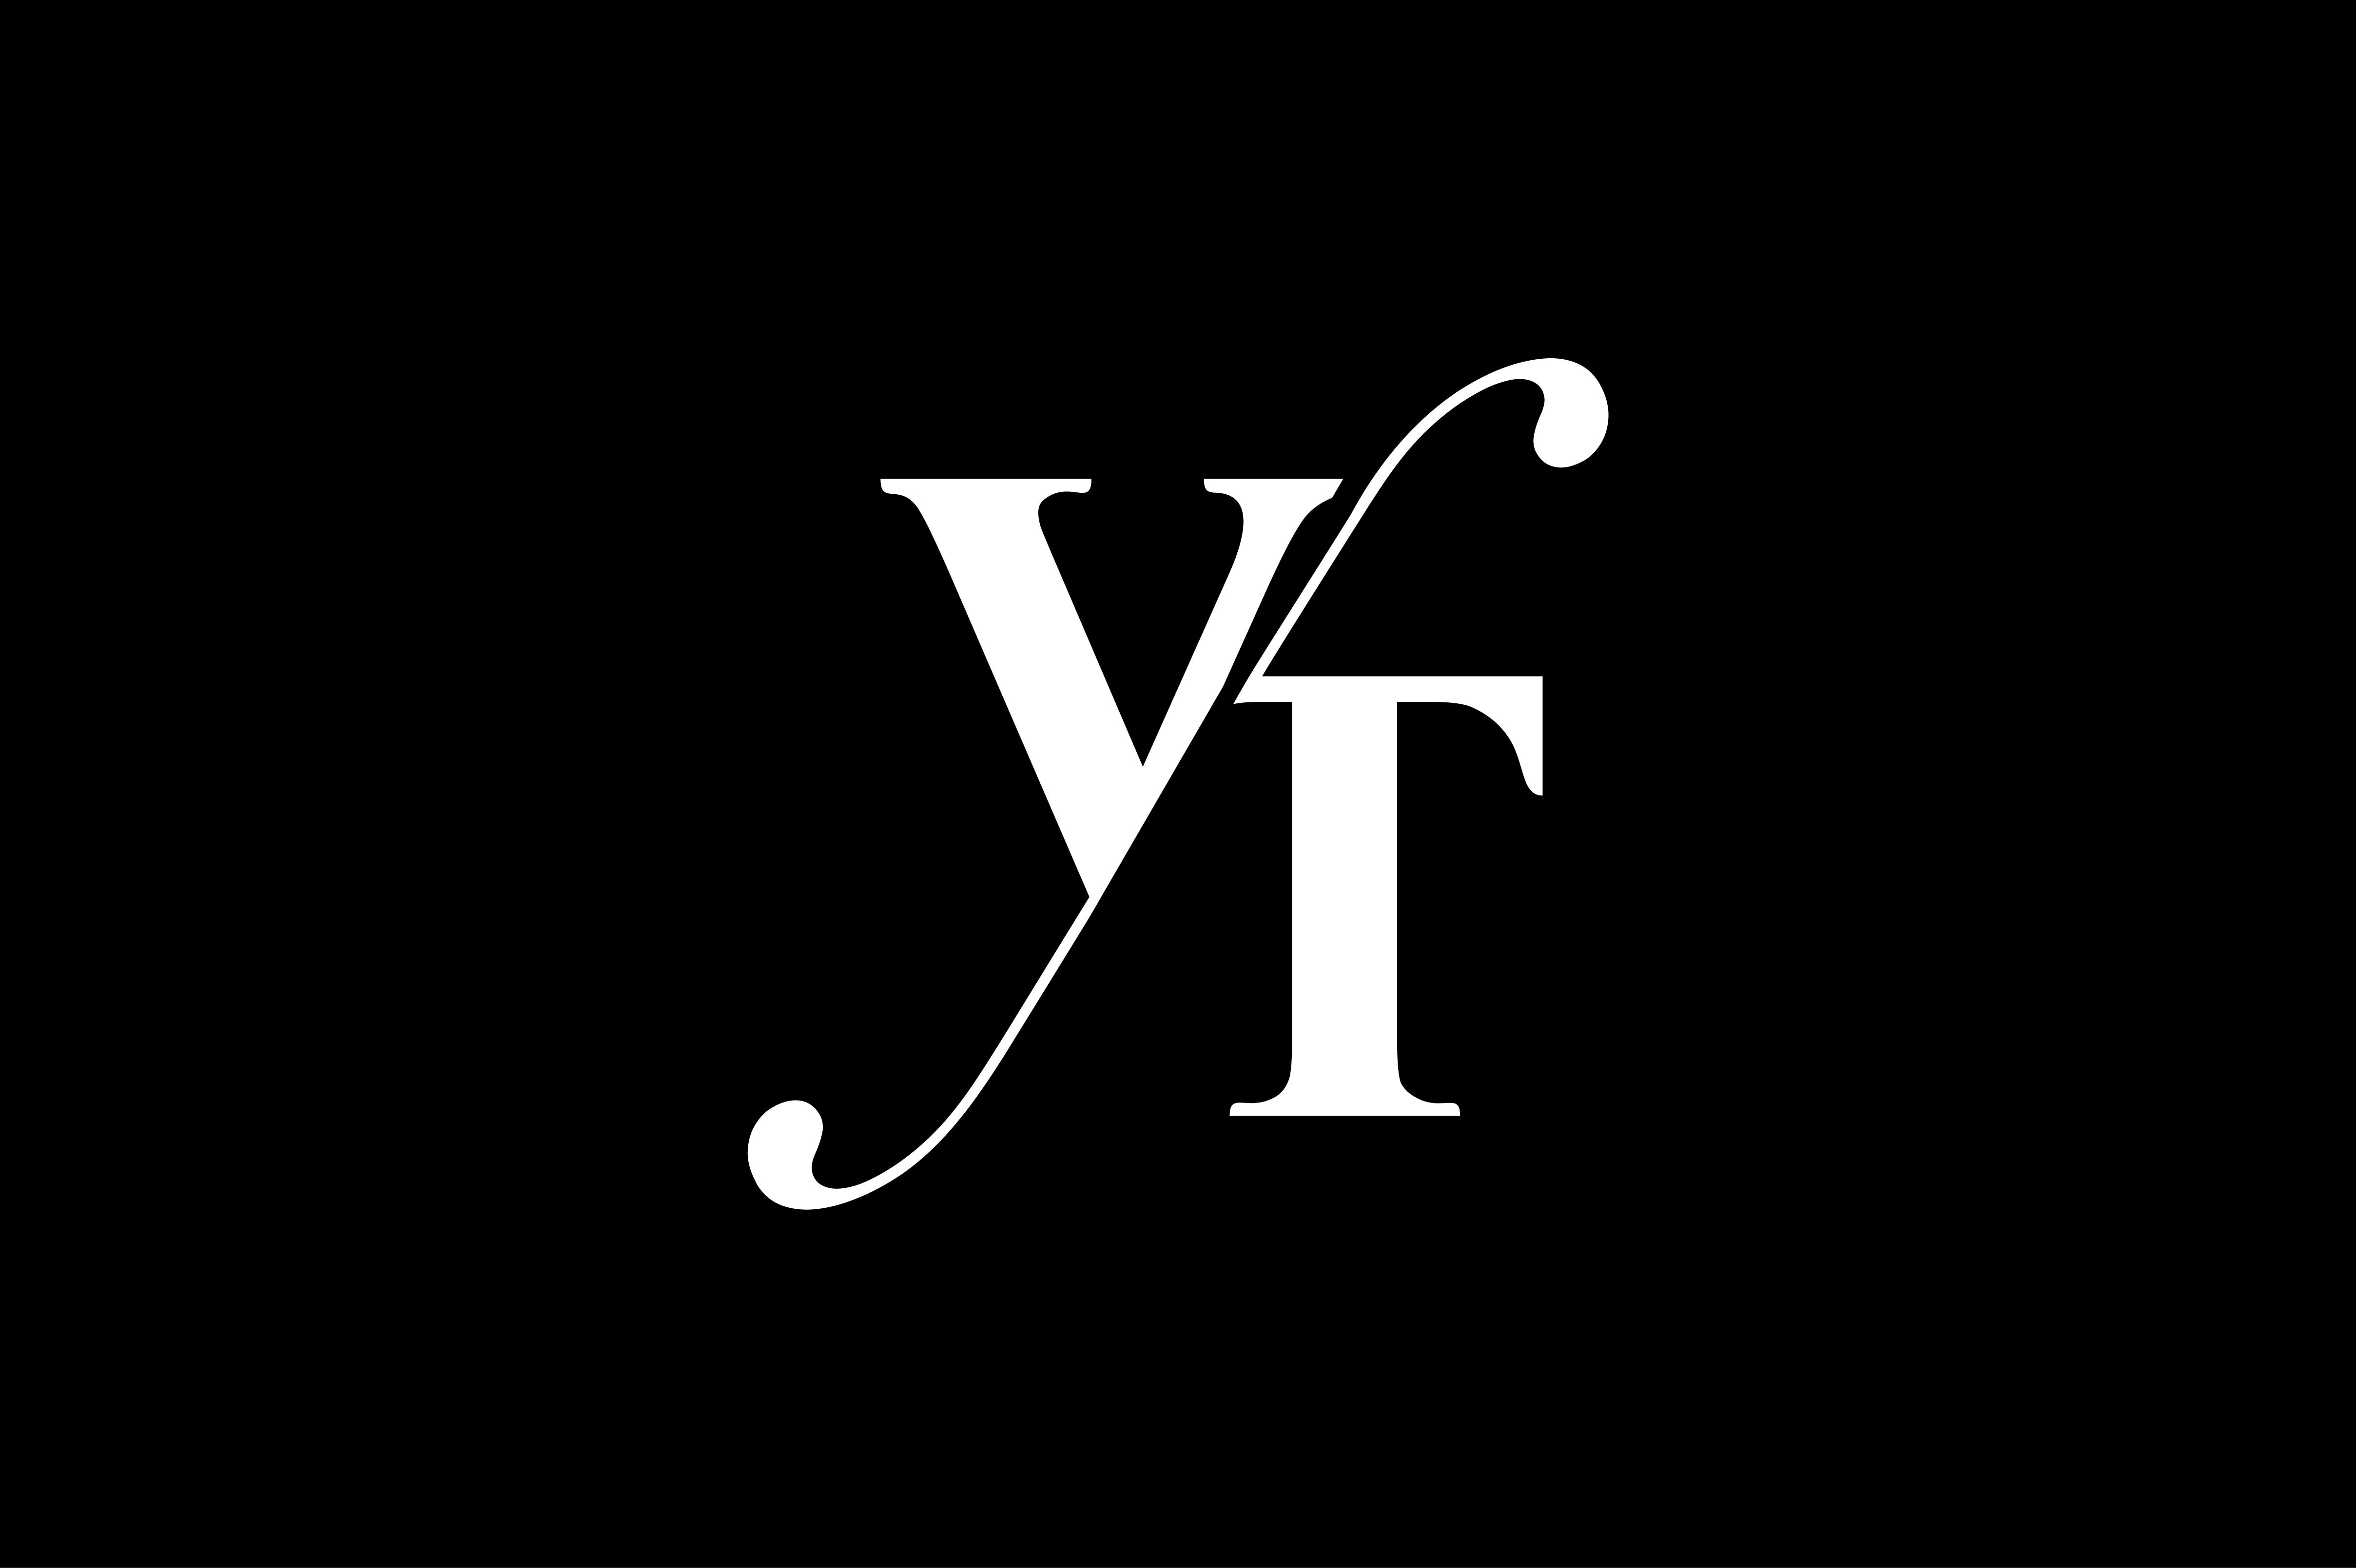 Vt Monogram Logo Design By Vectorseller Thehungryjpeg Com